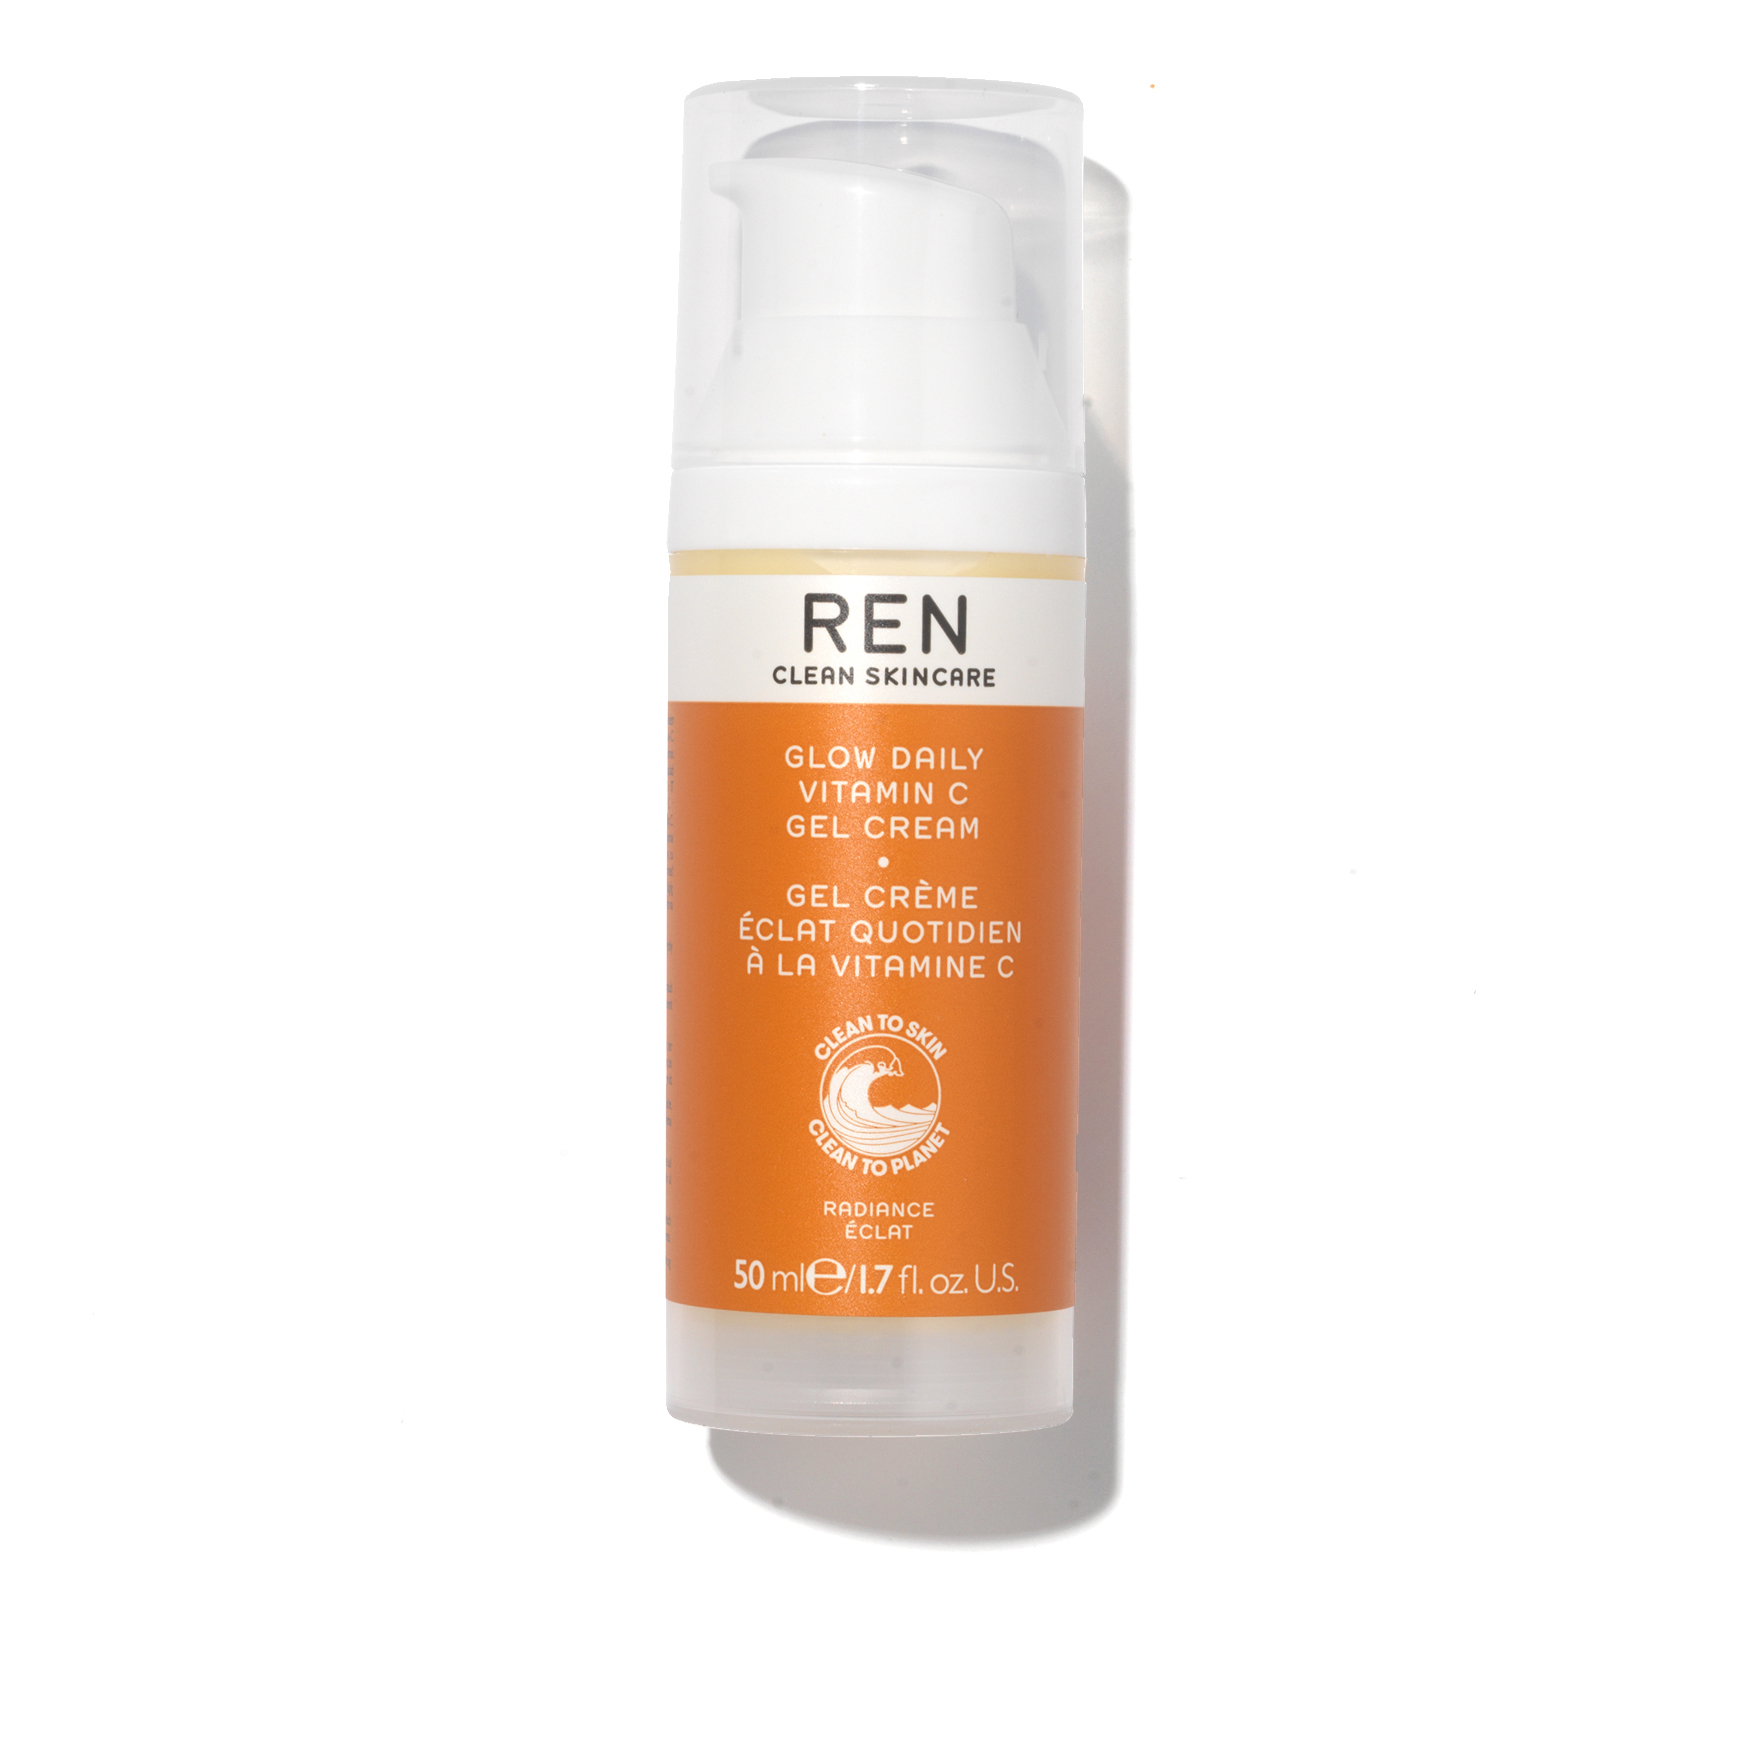 Ren Clean Skincare Glow Daily Vitamin C Gel Cream | Space NK